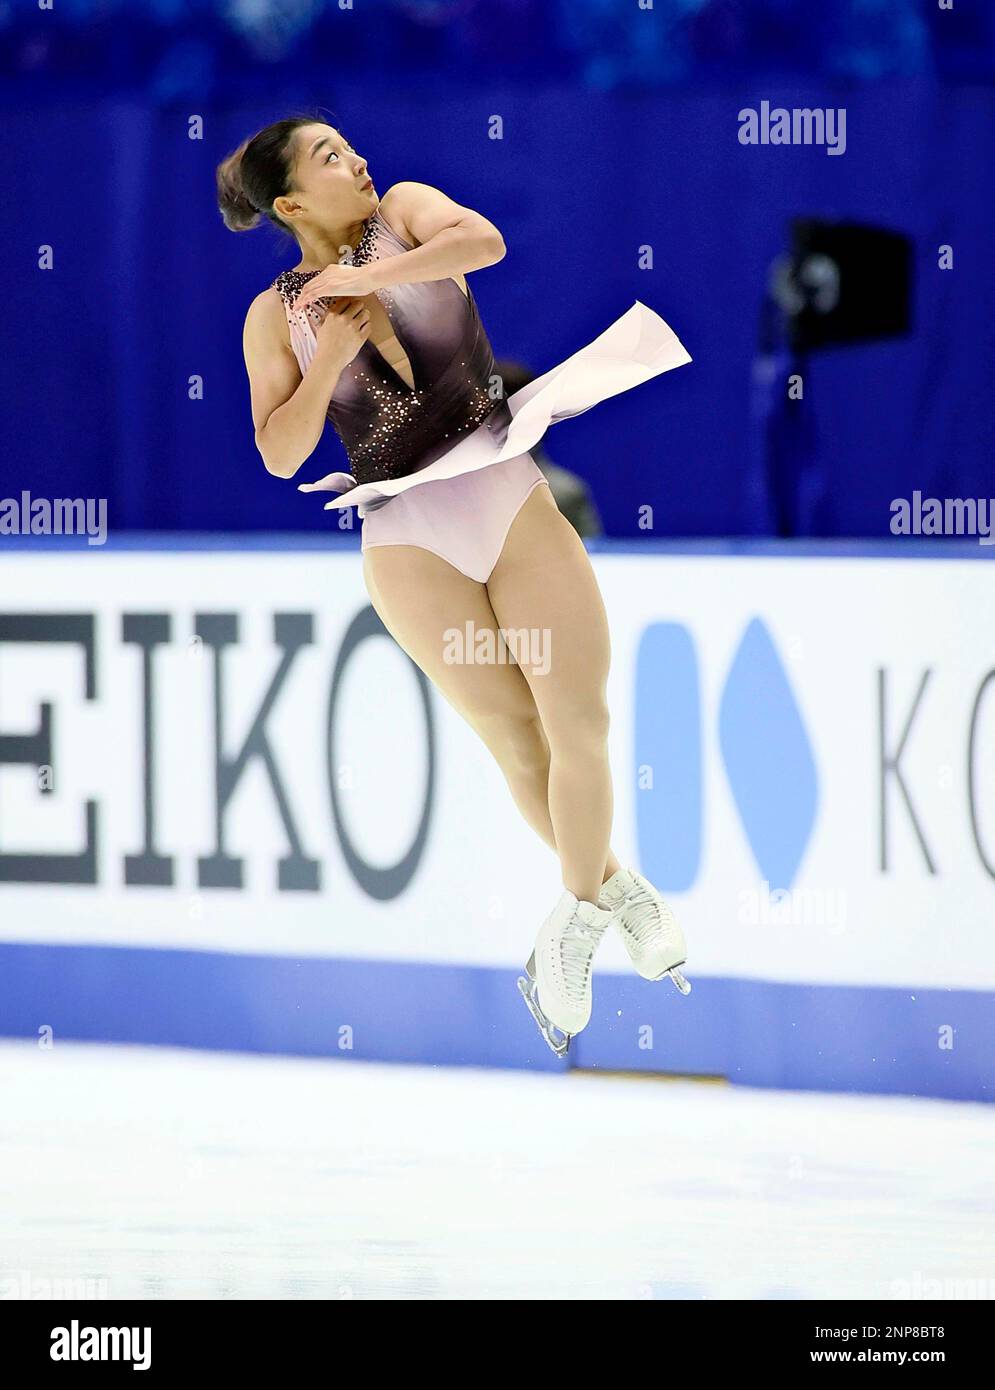 Kaori Sakamoto performs during the short program of ISU Grand Prix of Figure Skating 2020/21 NHK Trophy at RACTAB Dome in Osaka Prefecture on Nov